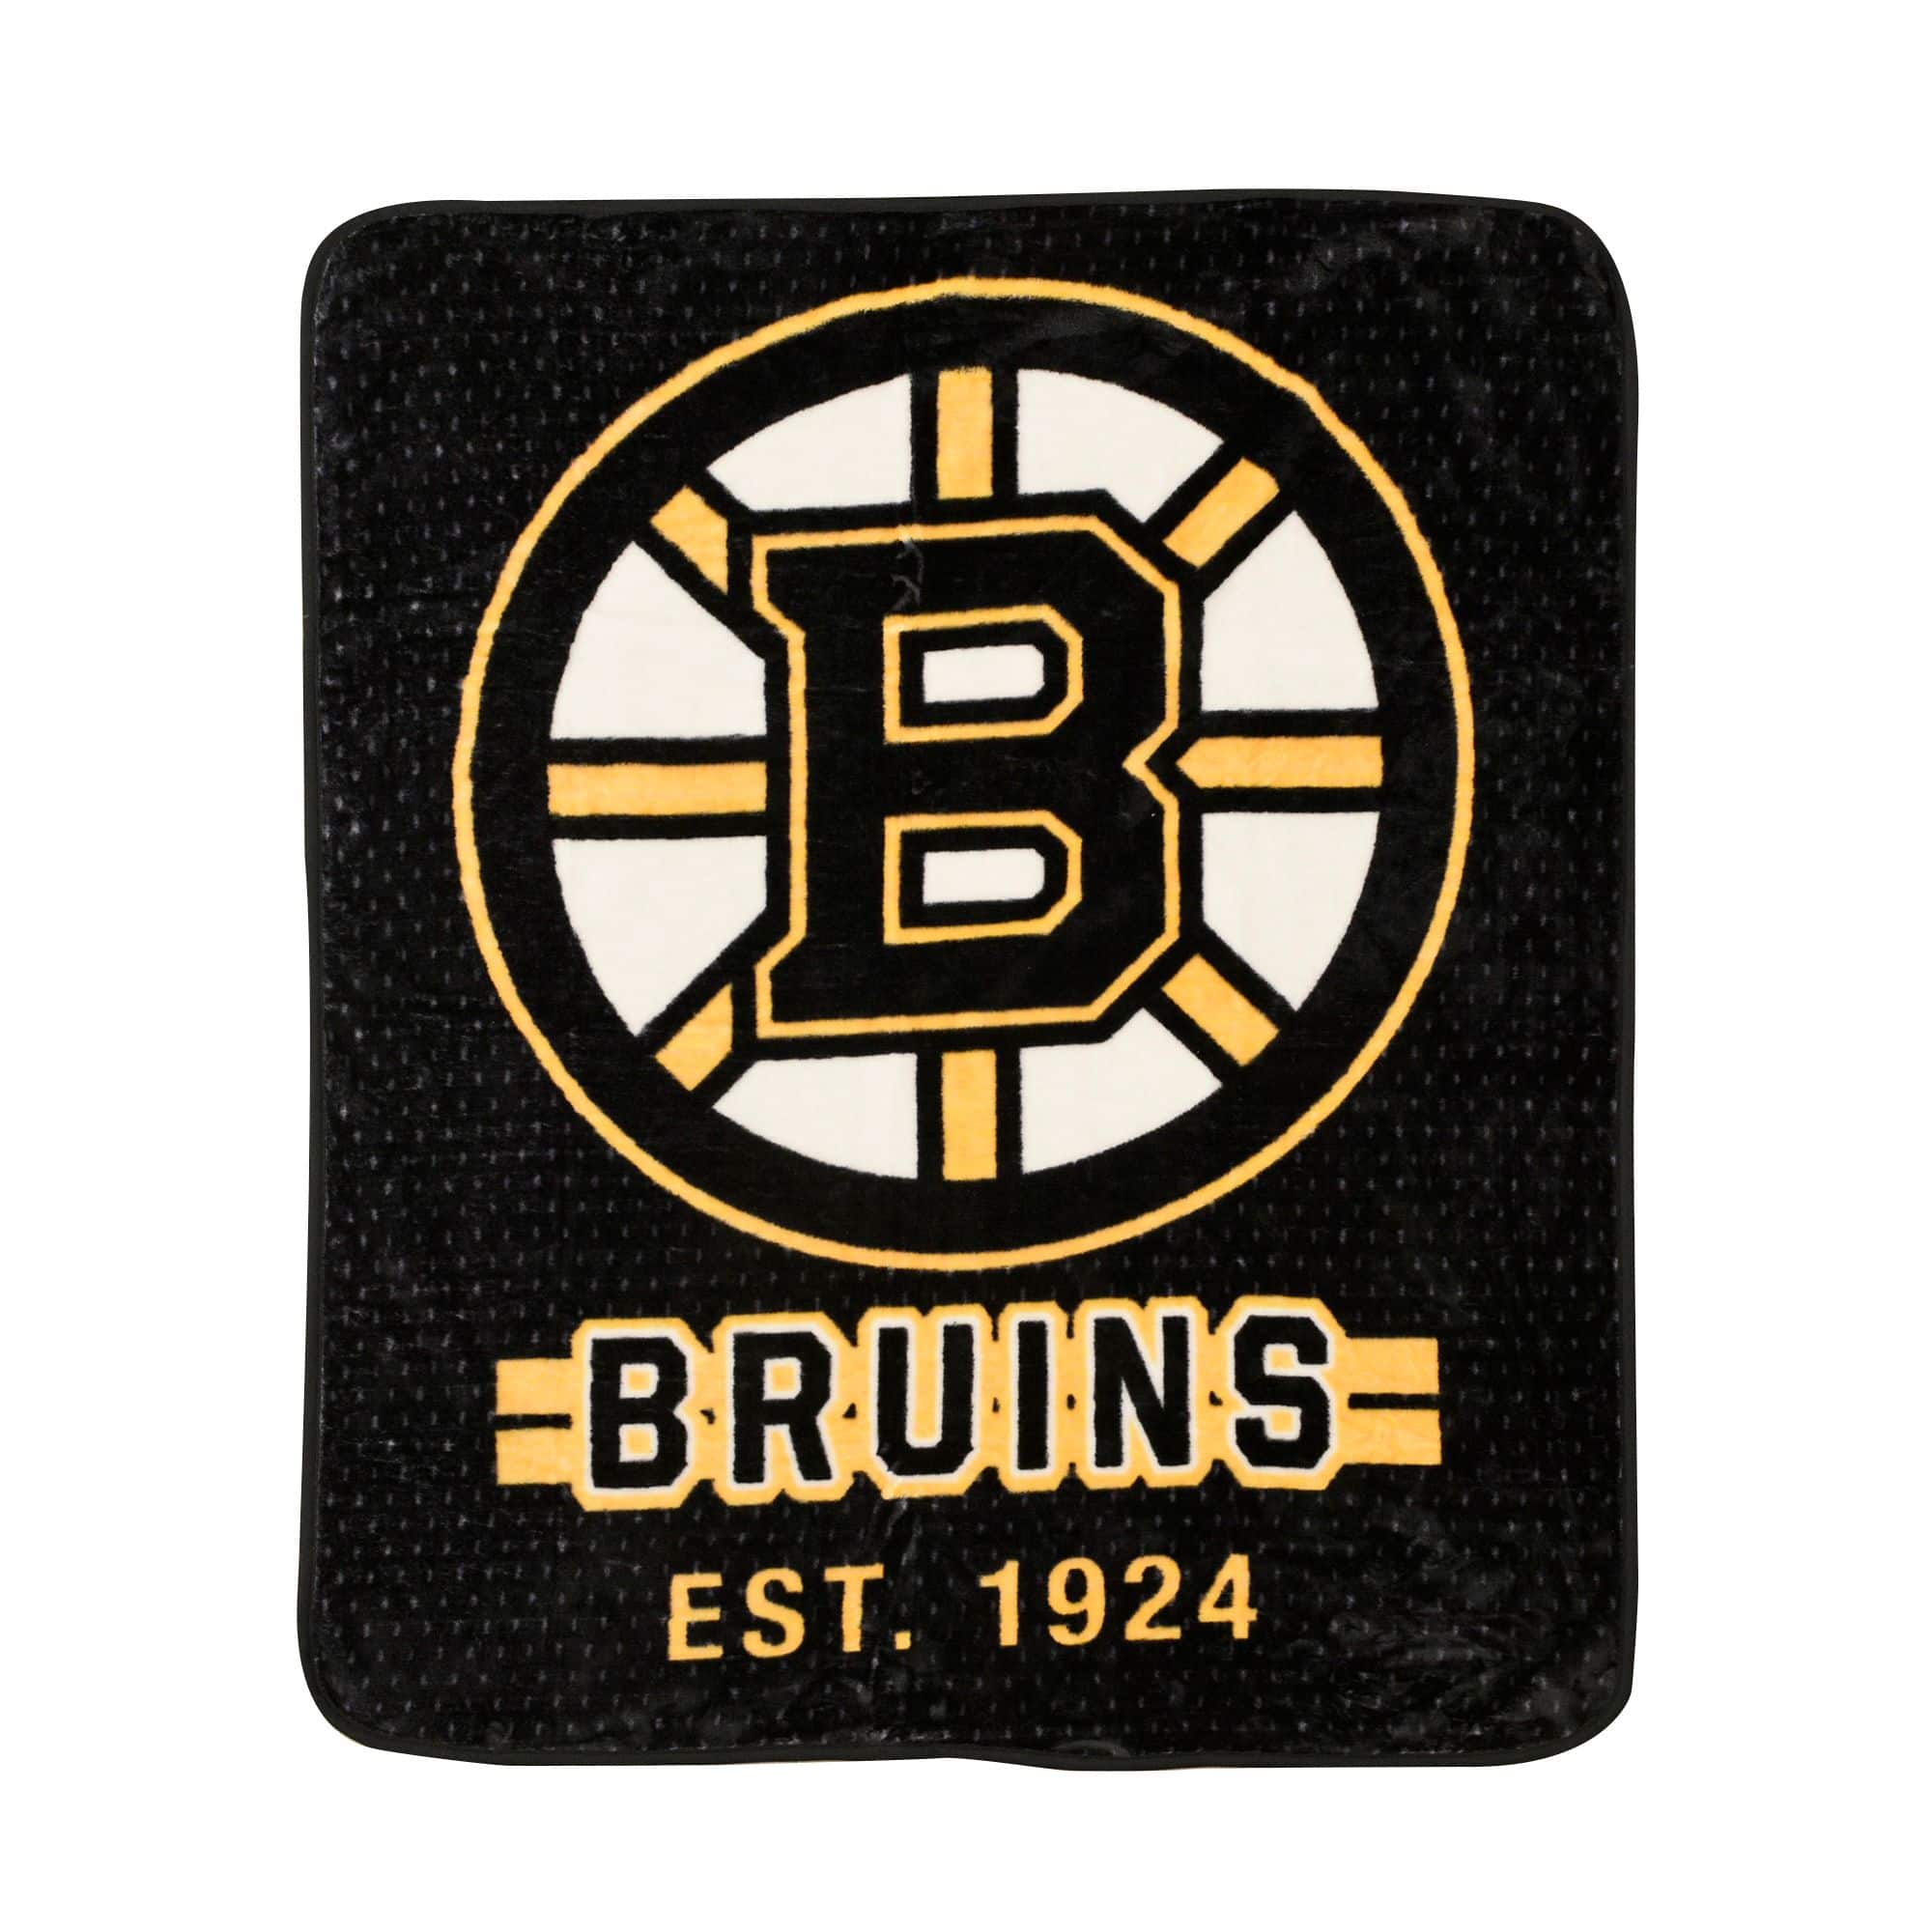 Boston Bruins Blanket- Boston Bruins Merchandise is Perfect for